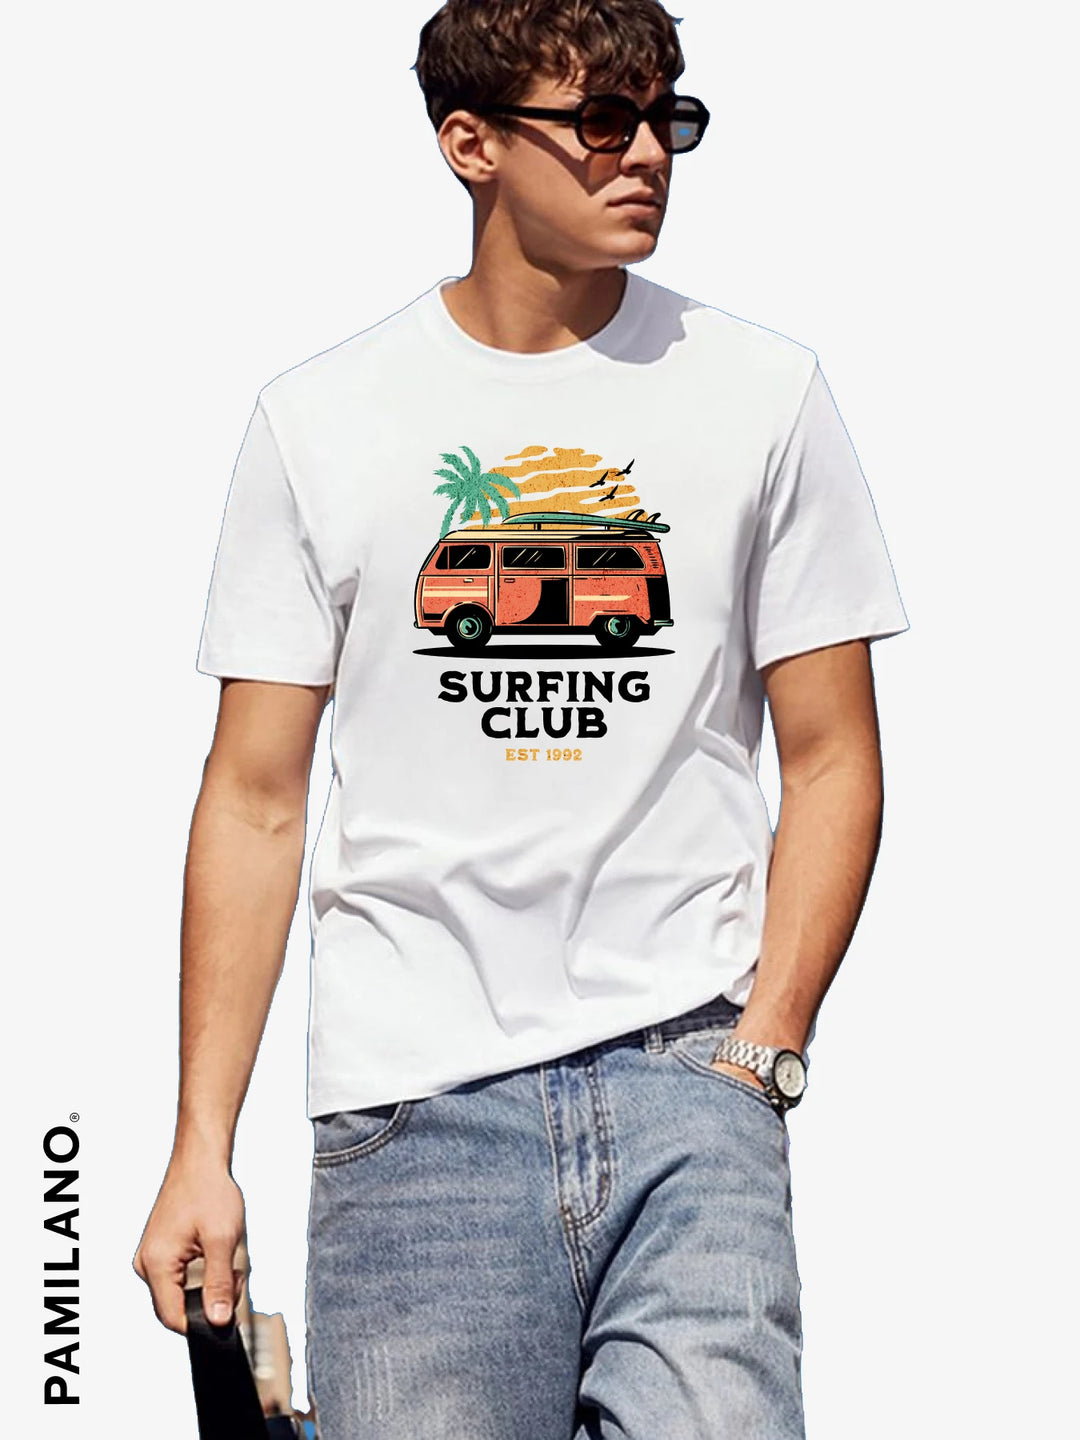 Surfing Club EST 1992- Unisex T-Shirt